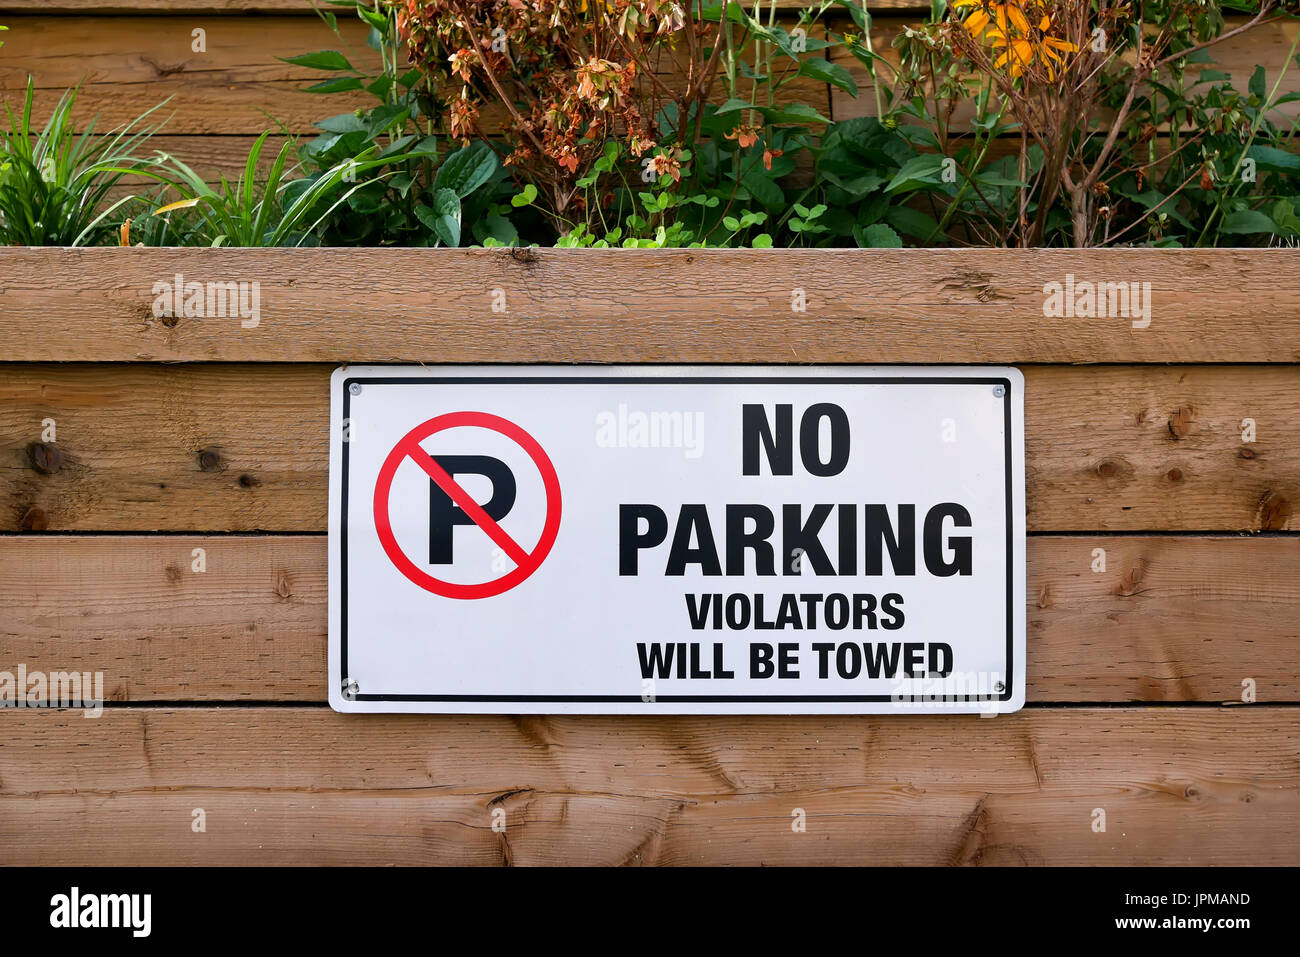 No parking violators will be towed sign Stock Photo